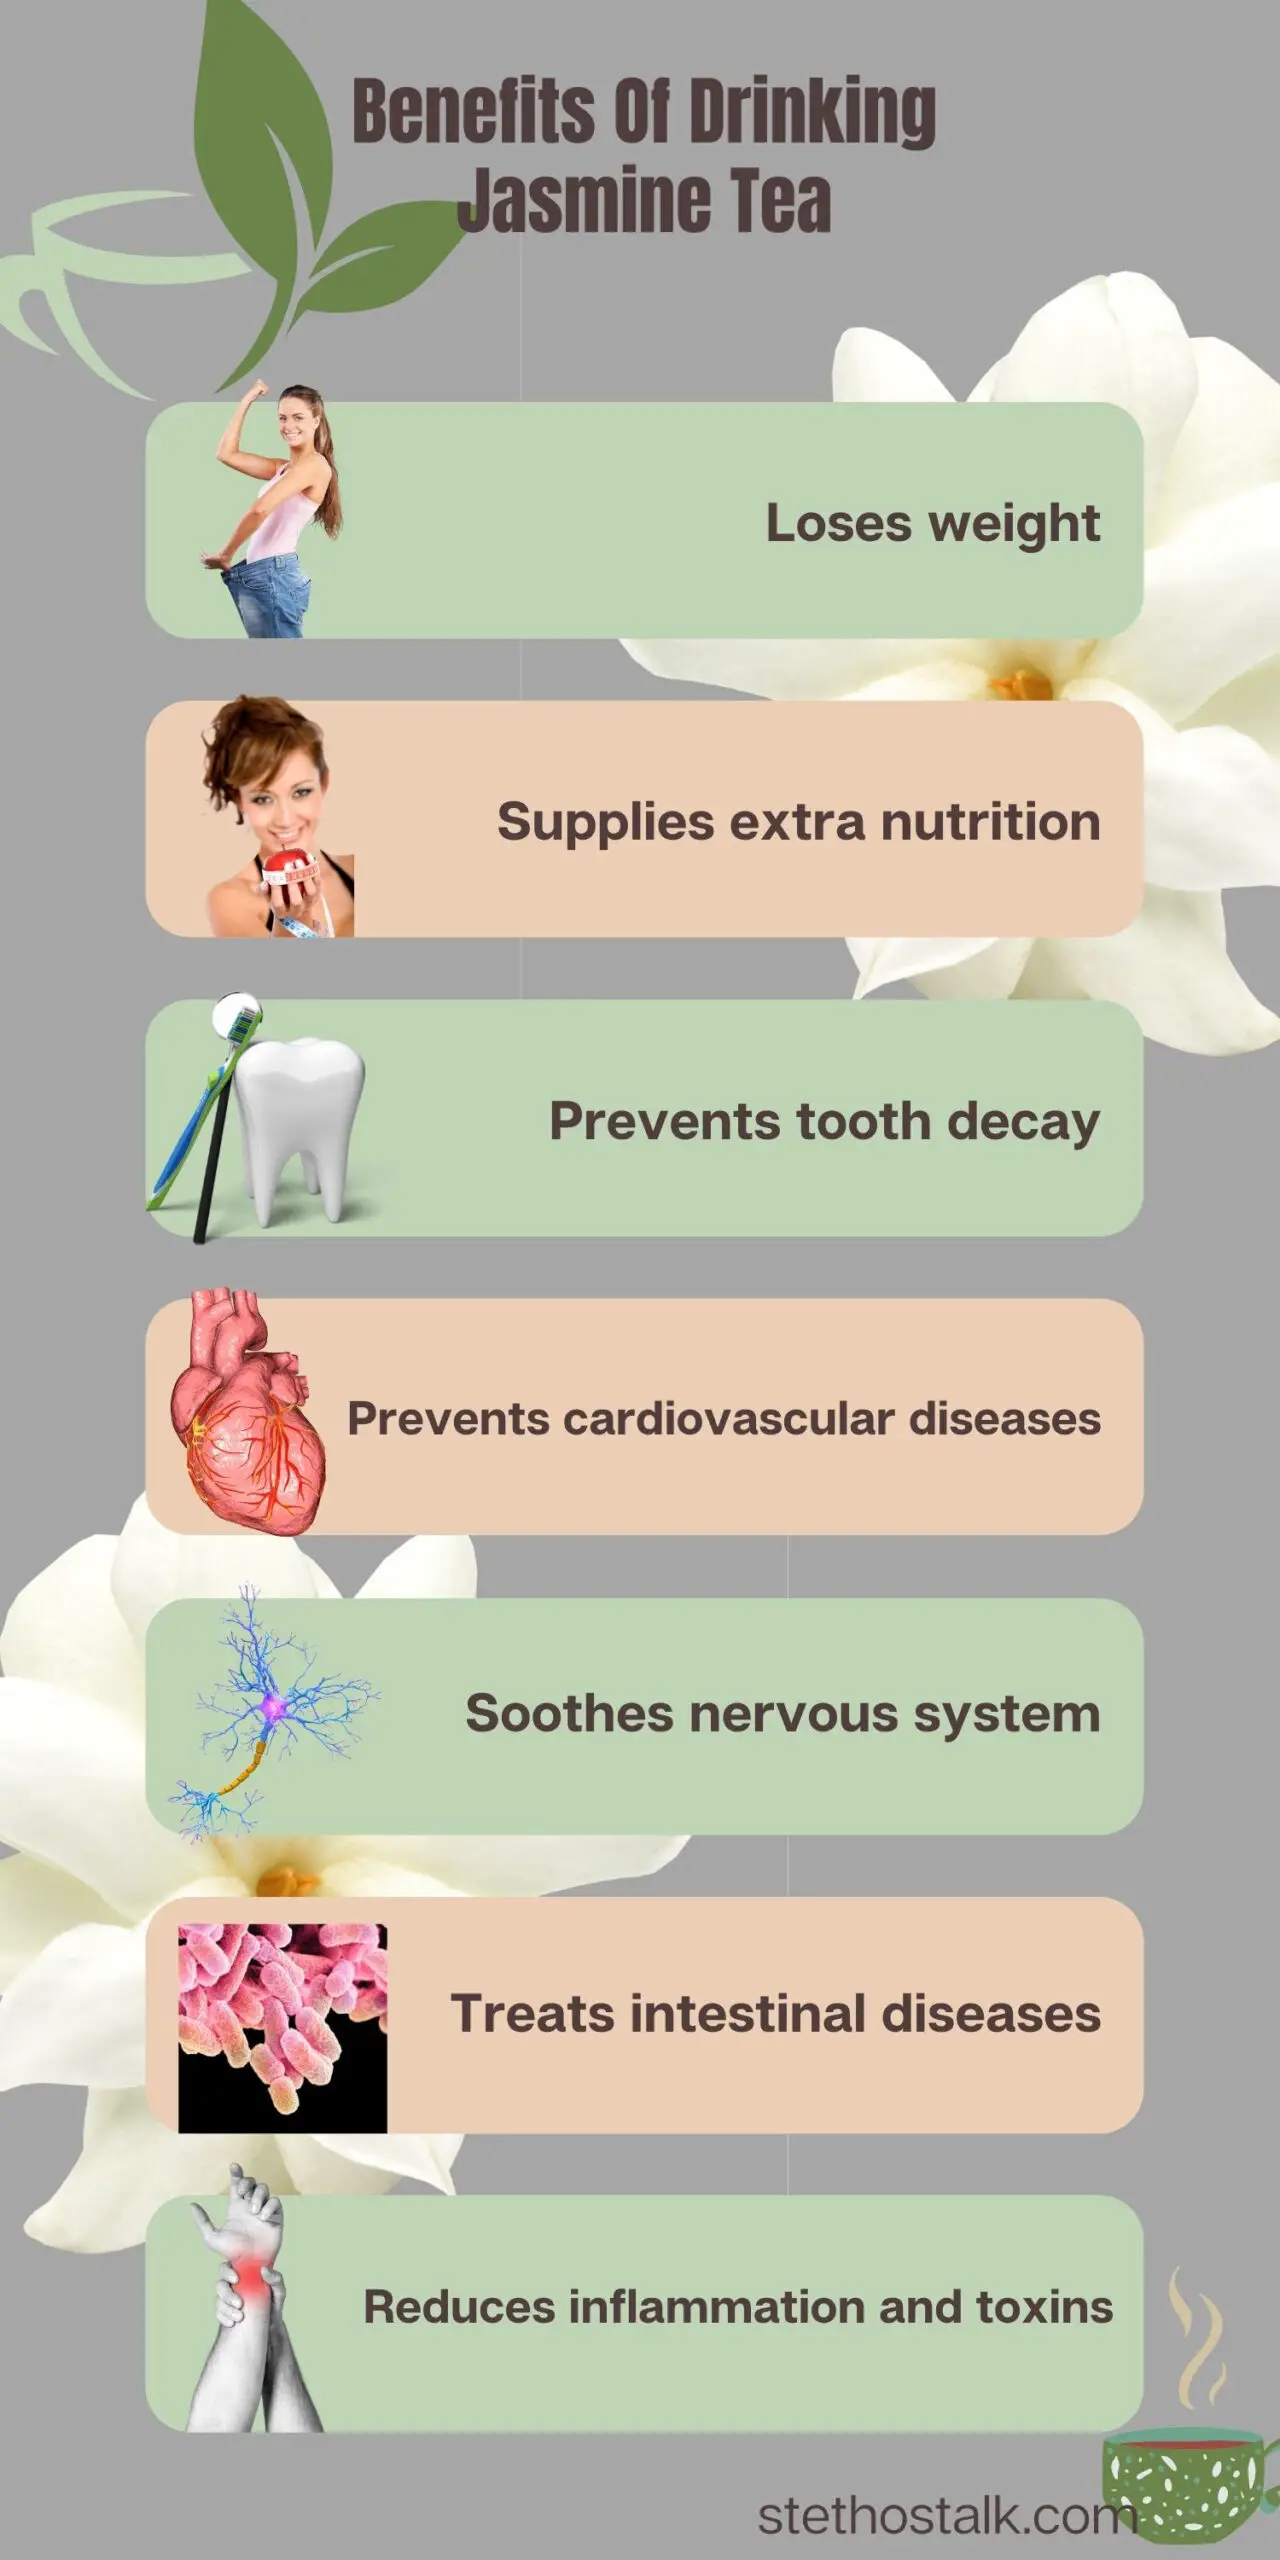 Jasmine Tea Benefits Infographic